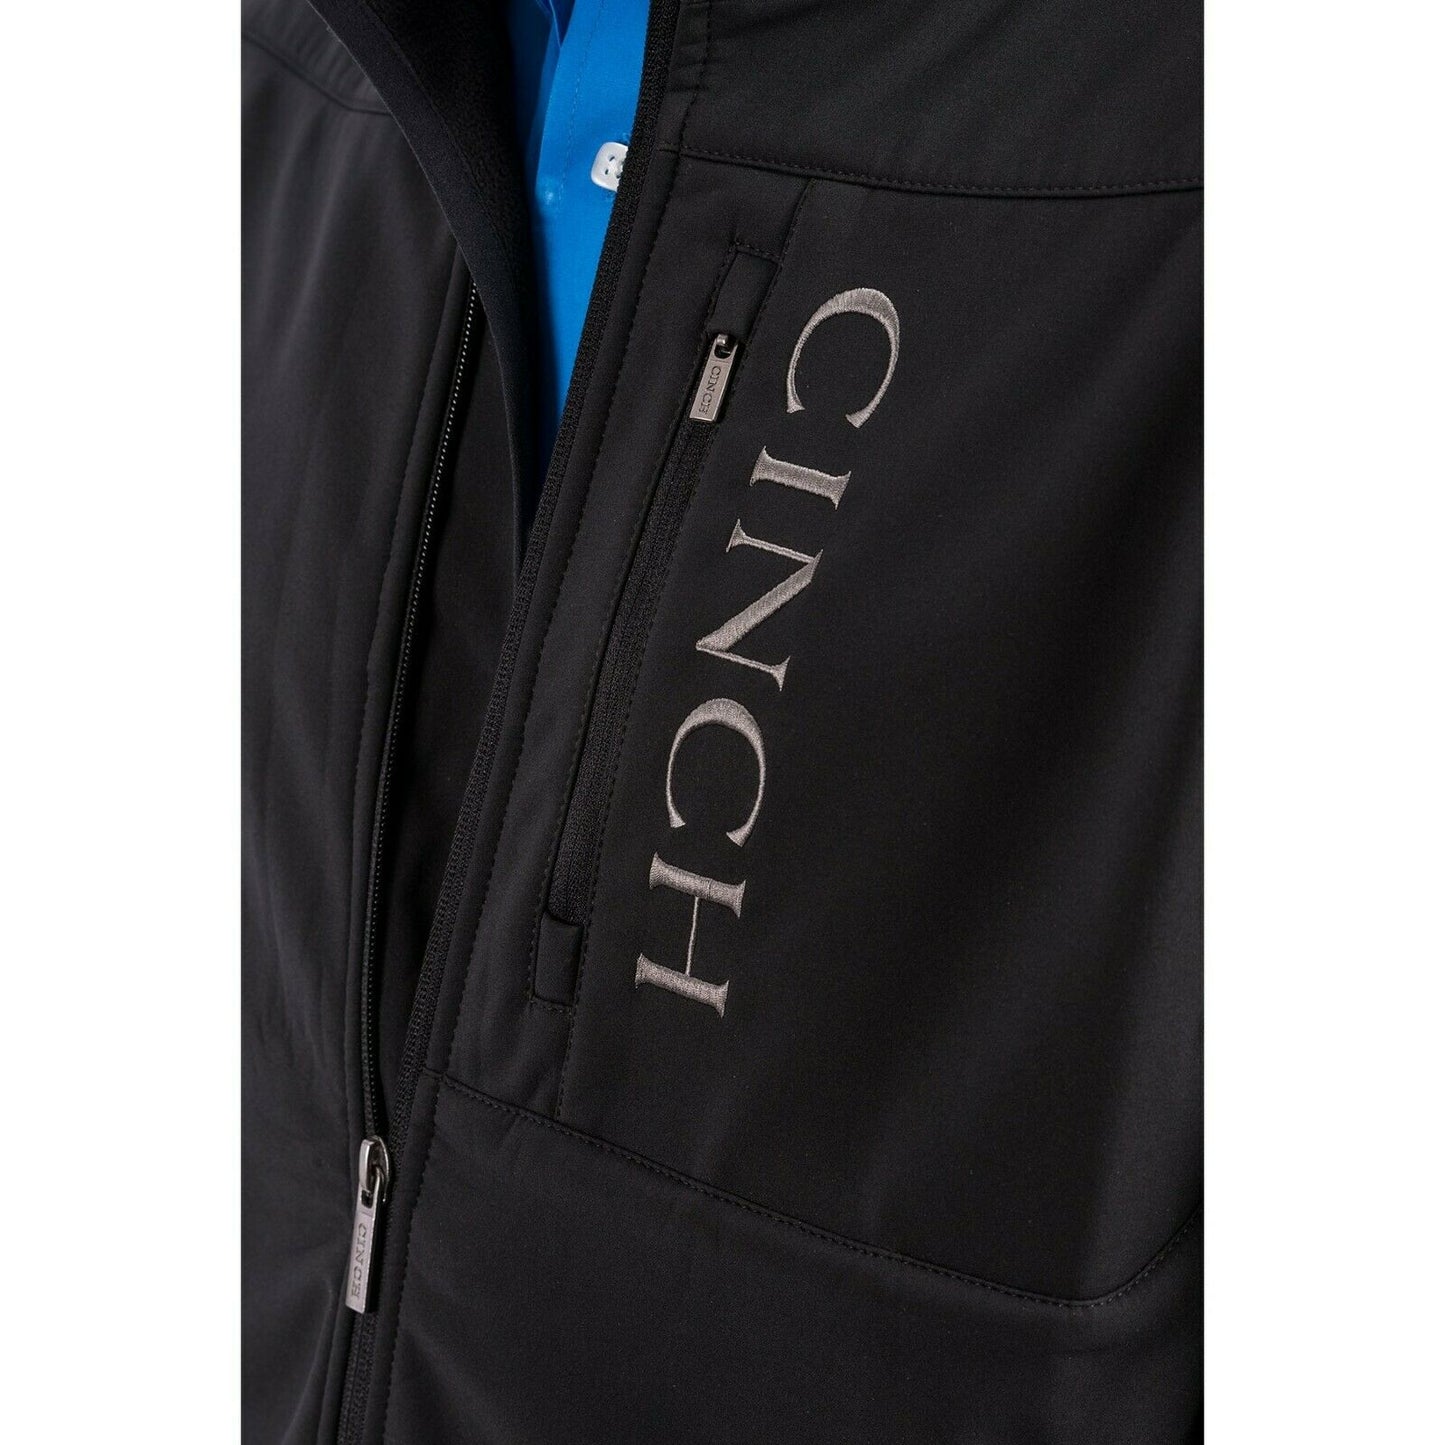 Cinch Women's Concealed Carry Bonded Jacket- Black